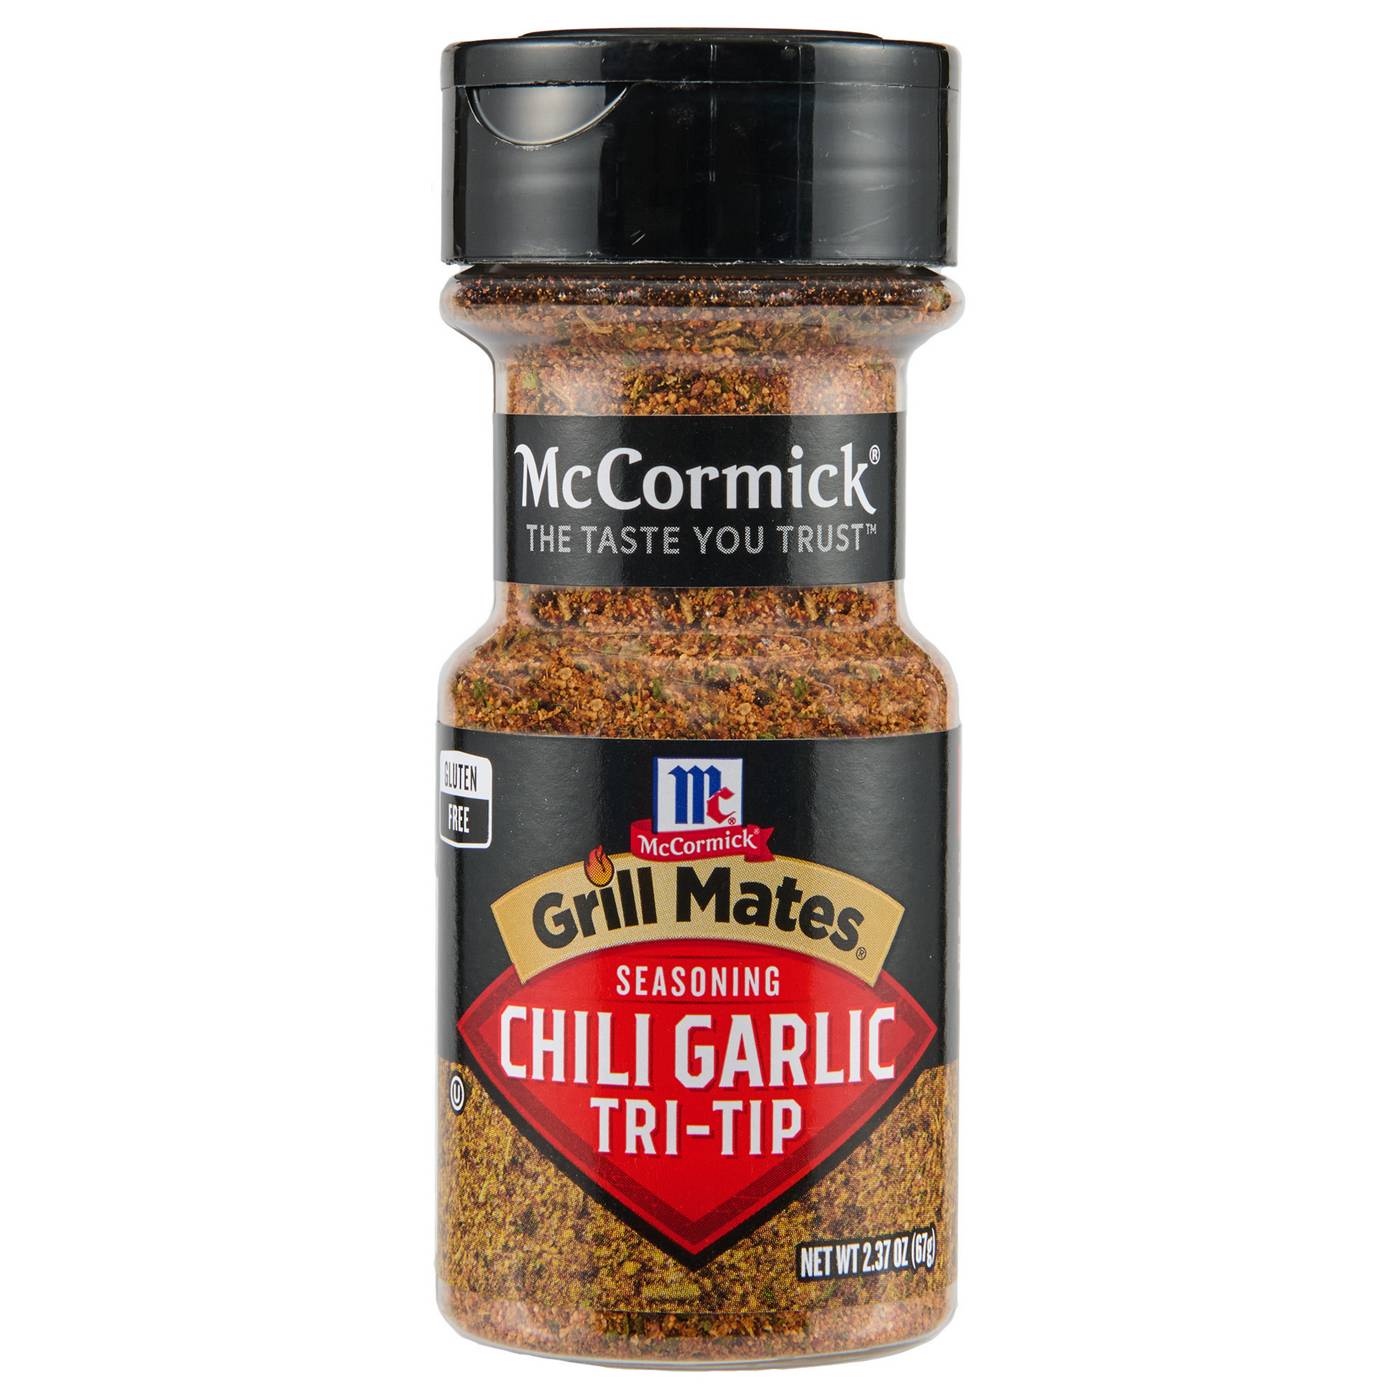 McCormick Grill Mates Tri Tip Seasoning; image 1 of 9